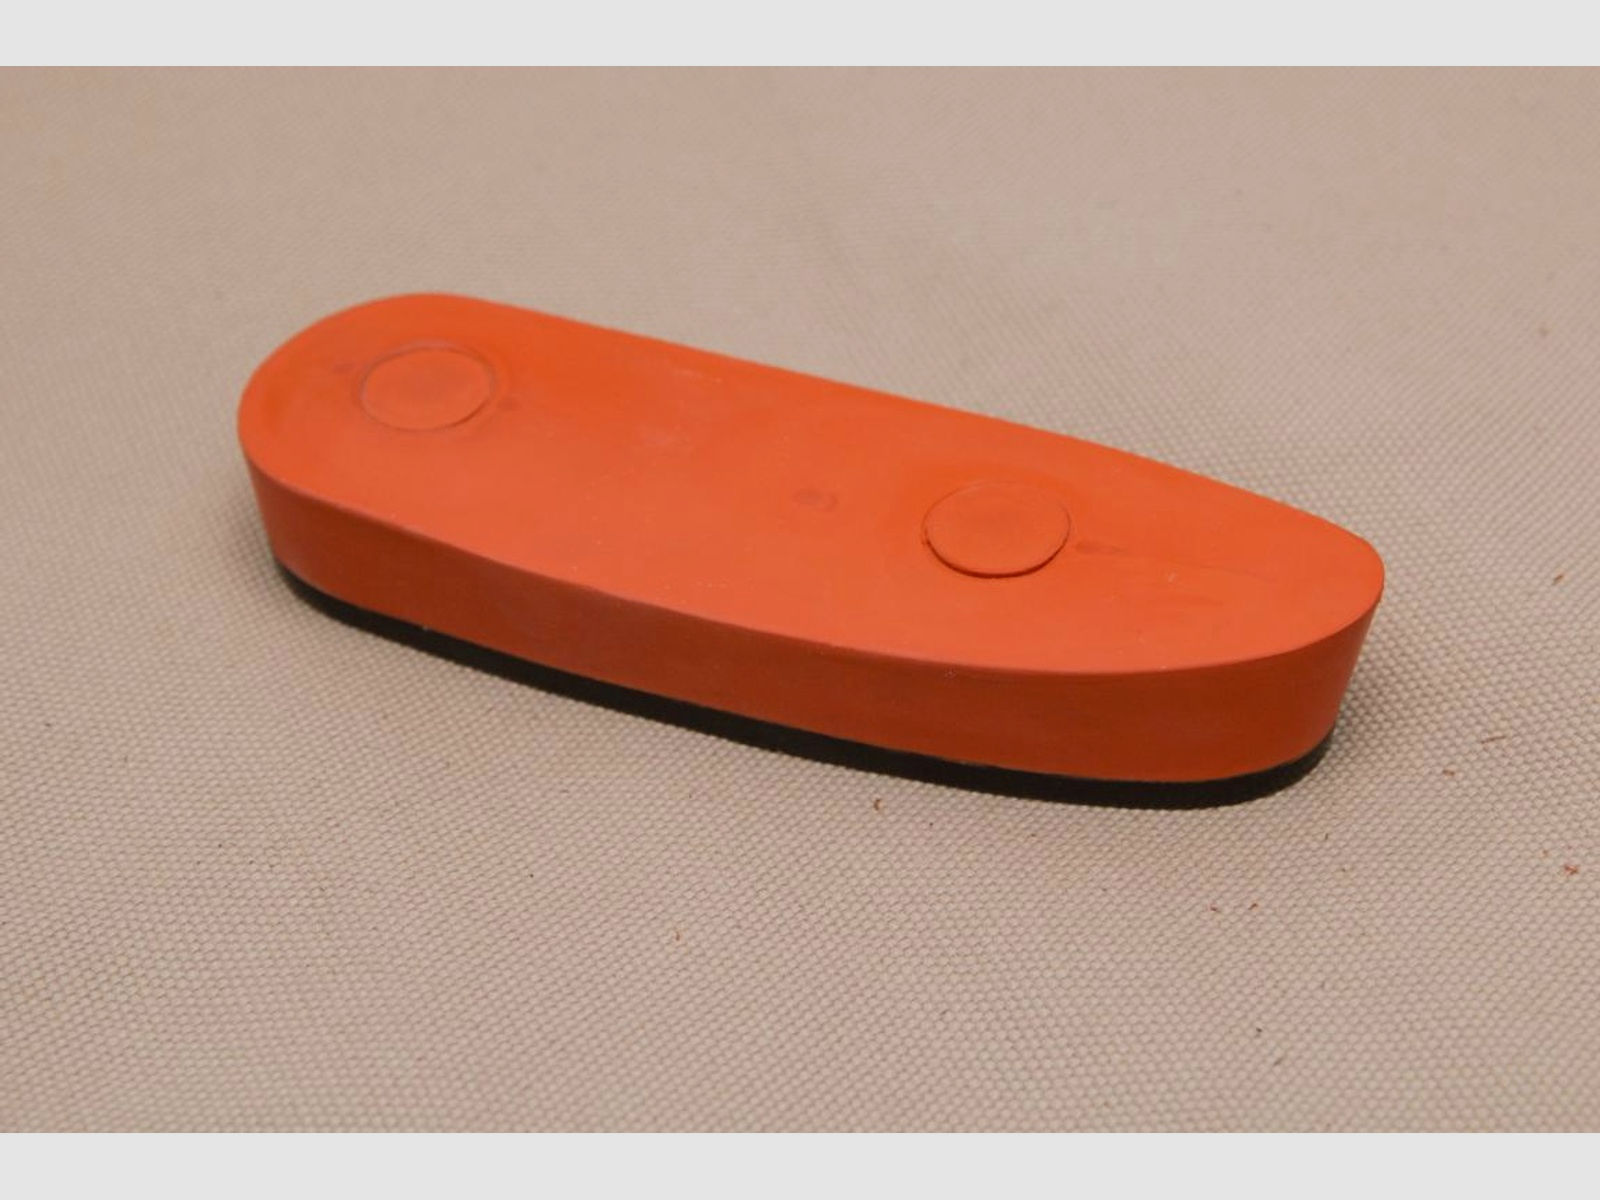 S.W. Silver Schaftkappe London orange - das Origial -  classic rubber recoil pad, Safari Gummischaftkappe No. 3